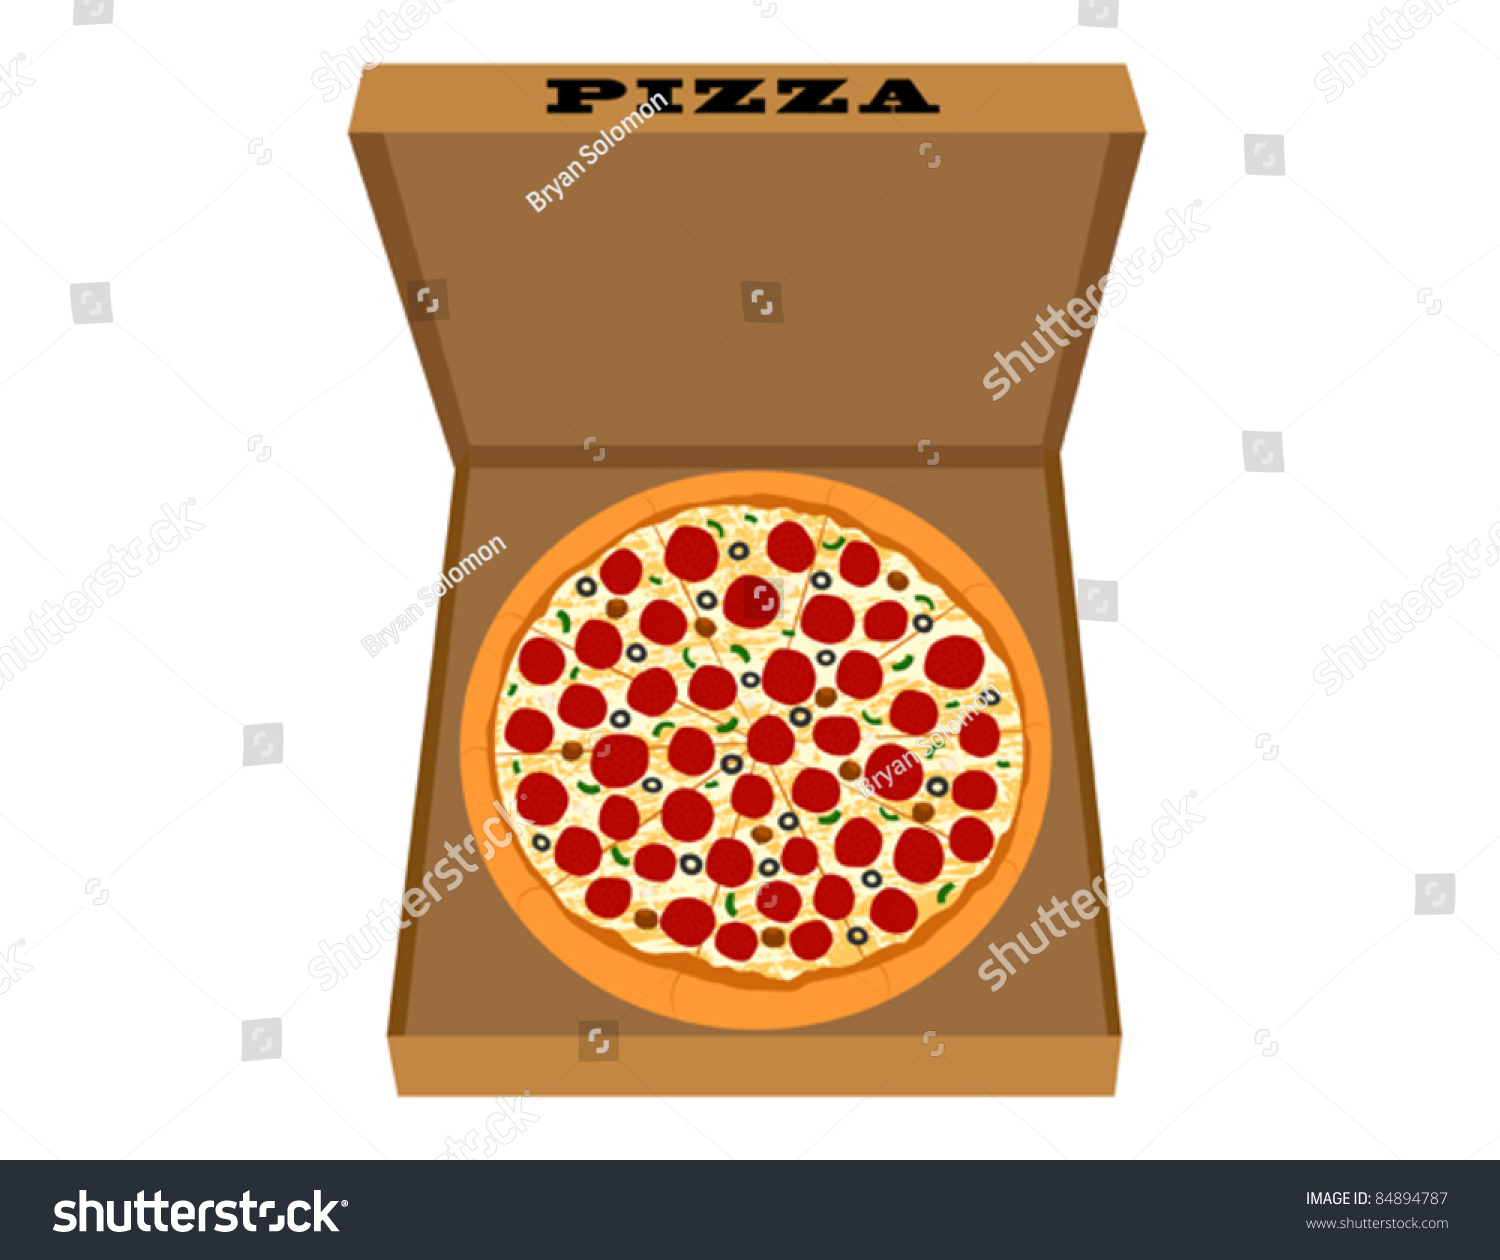 pizza box clipart free - photo #30